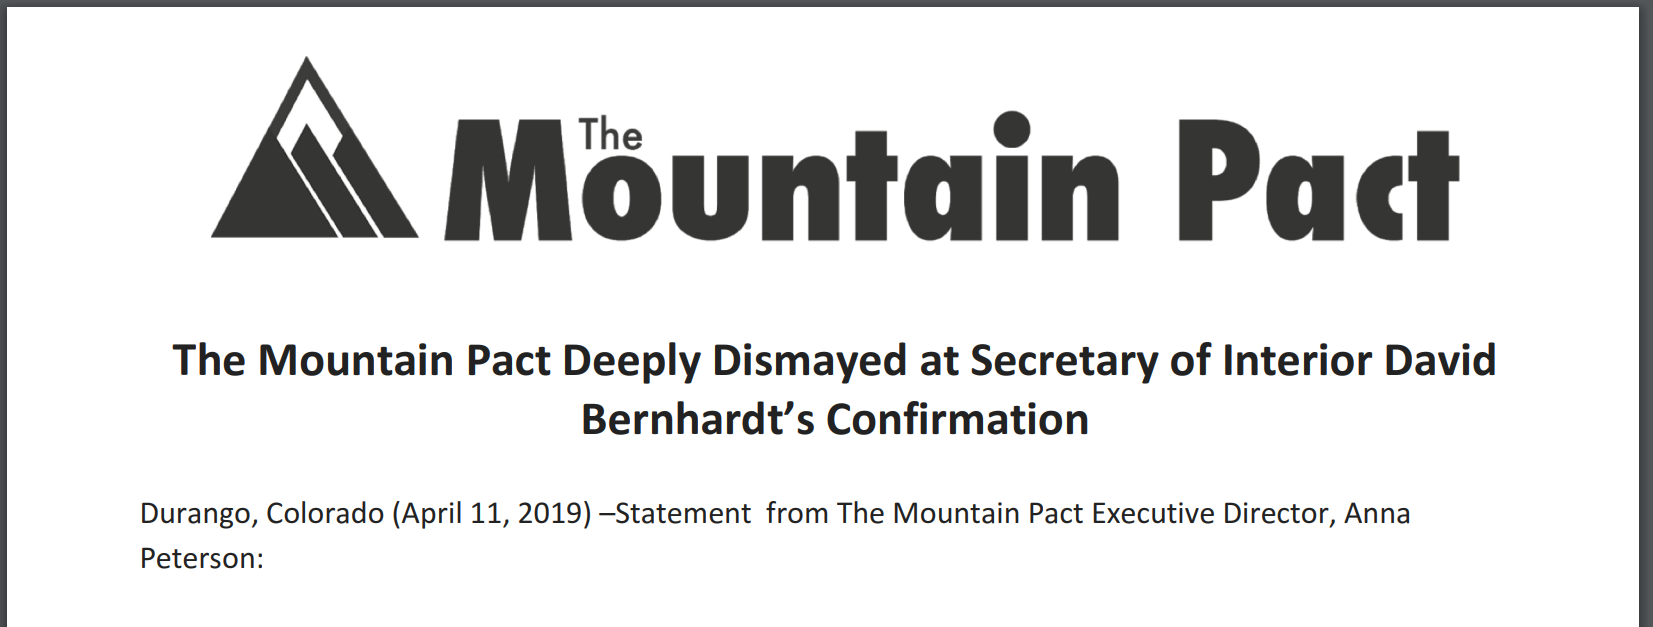 Bernhardt's Confirmation